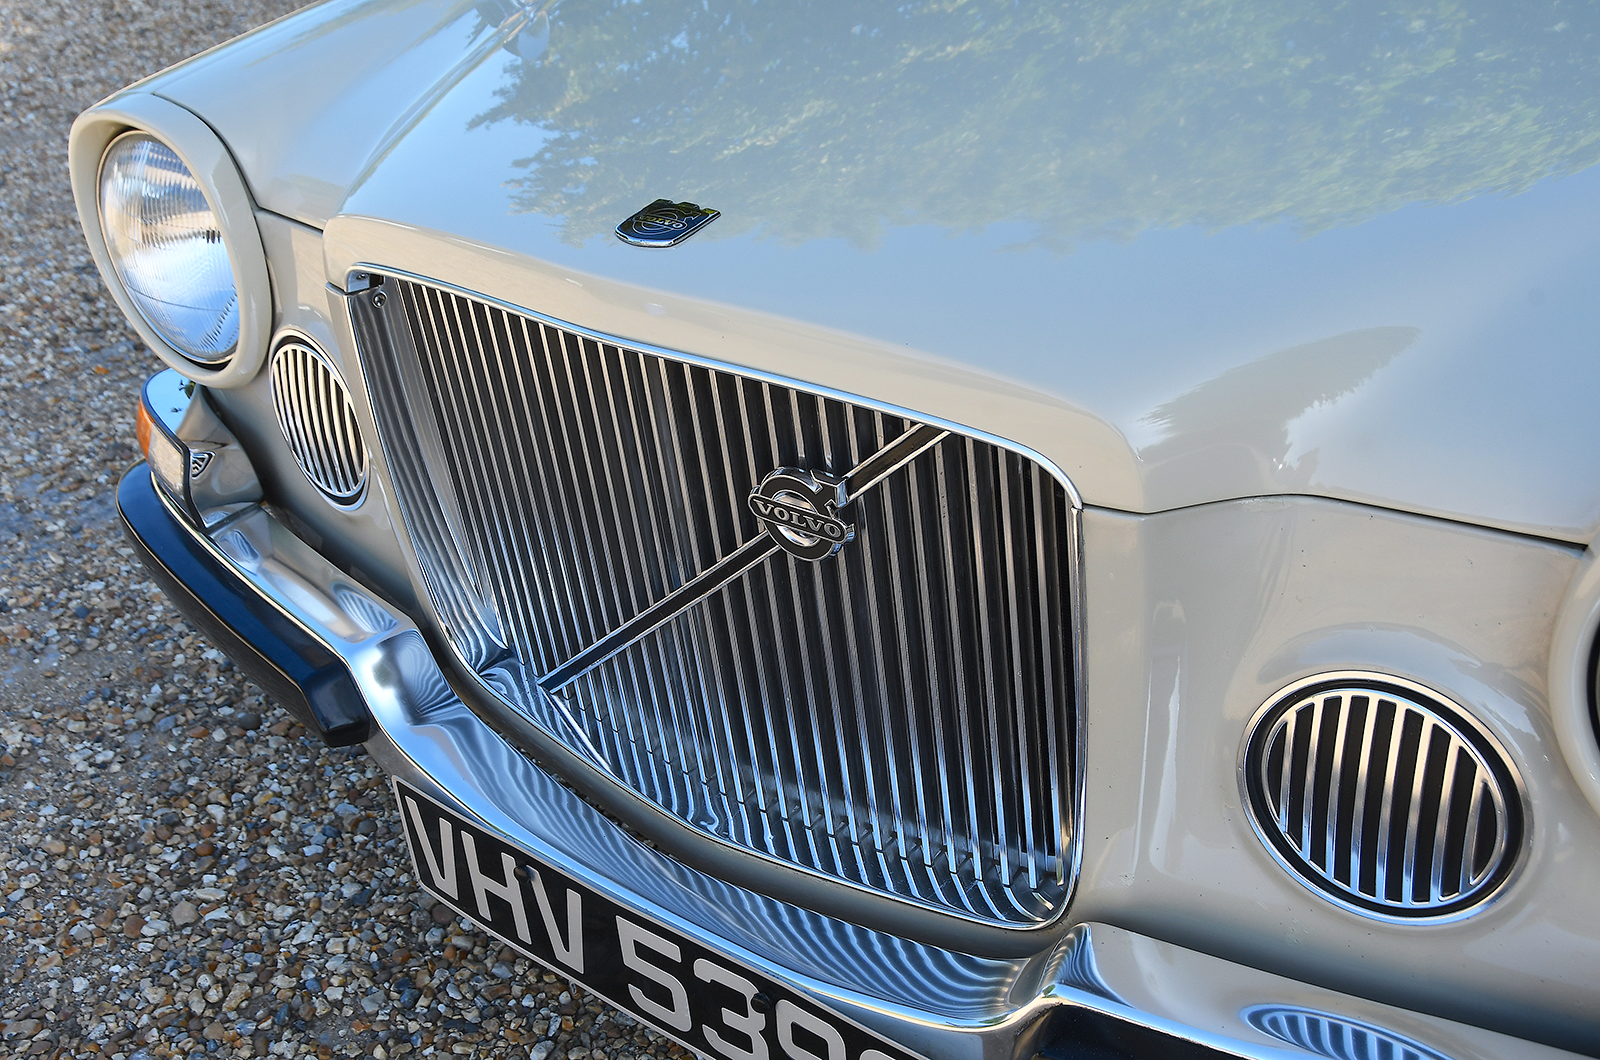 Classic & Sports Car – Executive elegance: Volvo 164 vs Daimler Sovereign 2.8